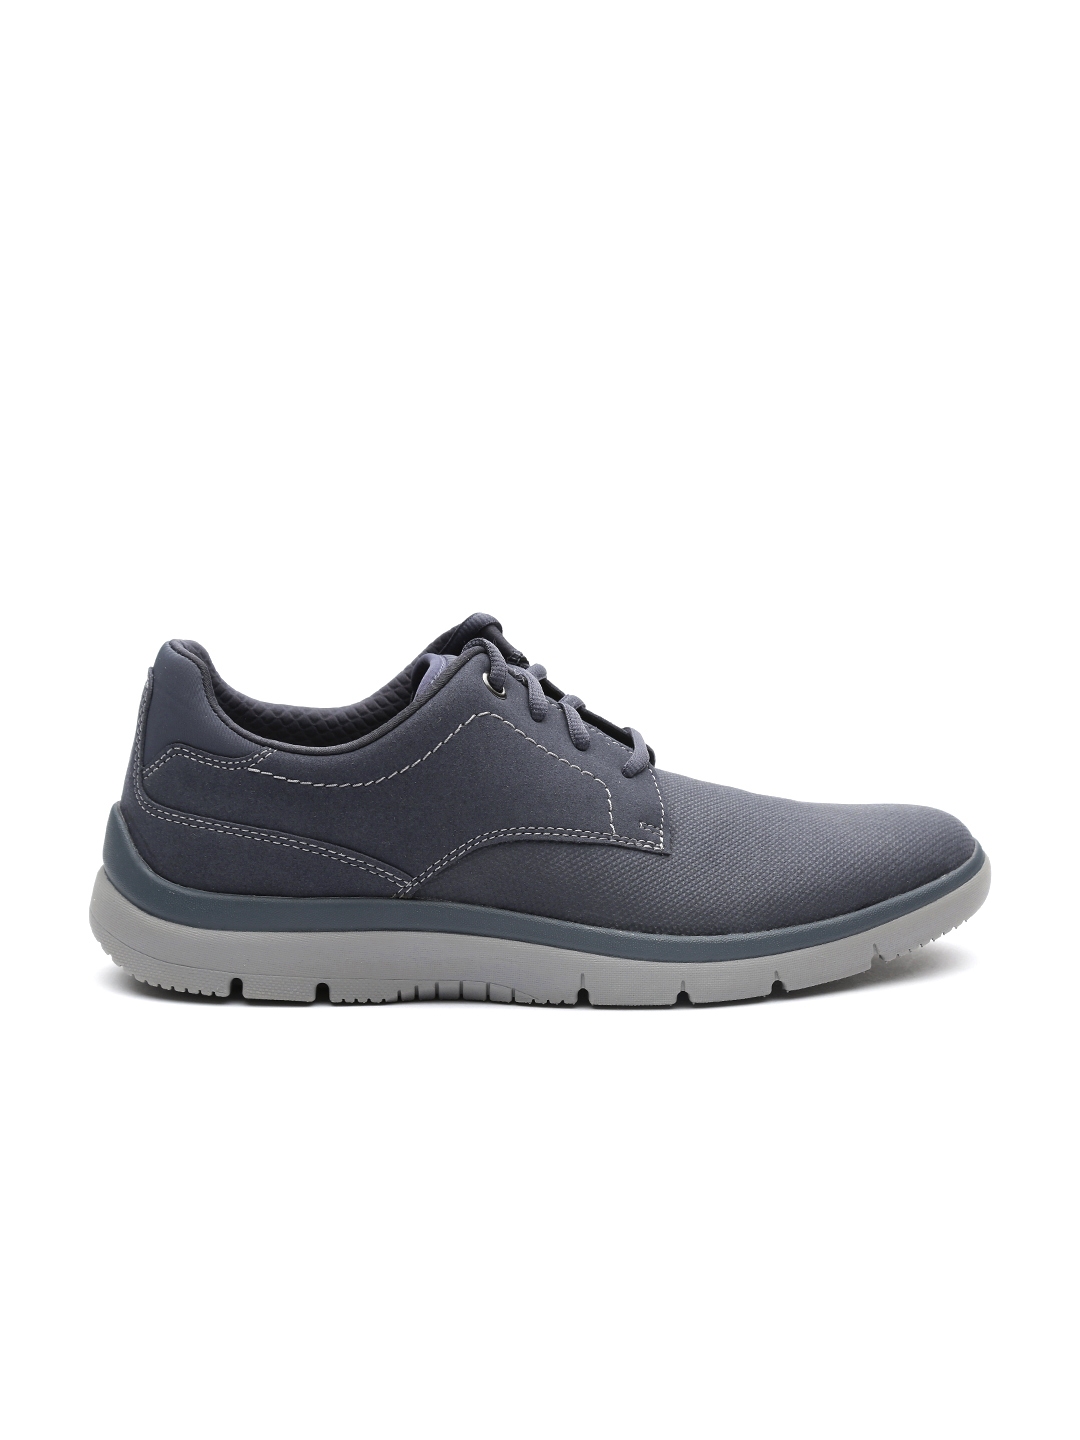 Buy Clarks Men Navy Blue Textured Sneakers - Casual Shoes for Men ...